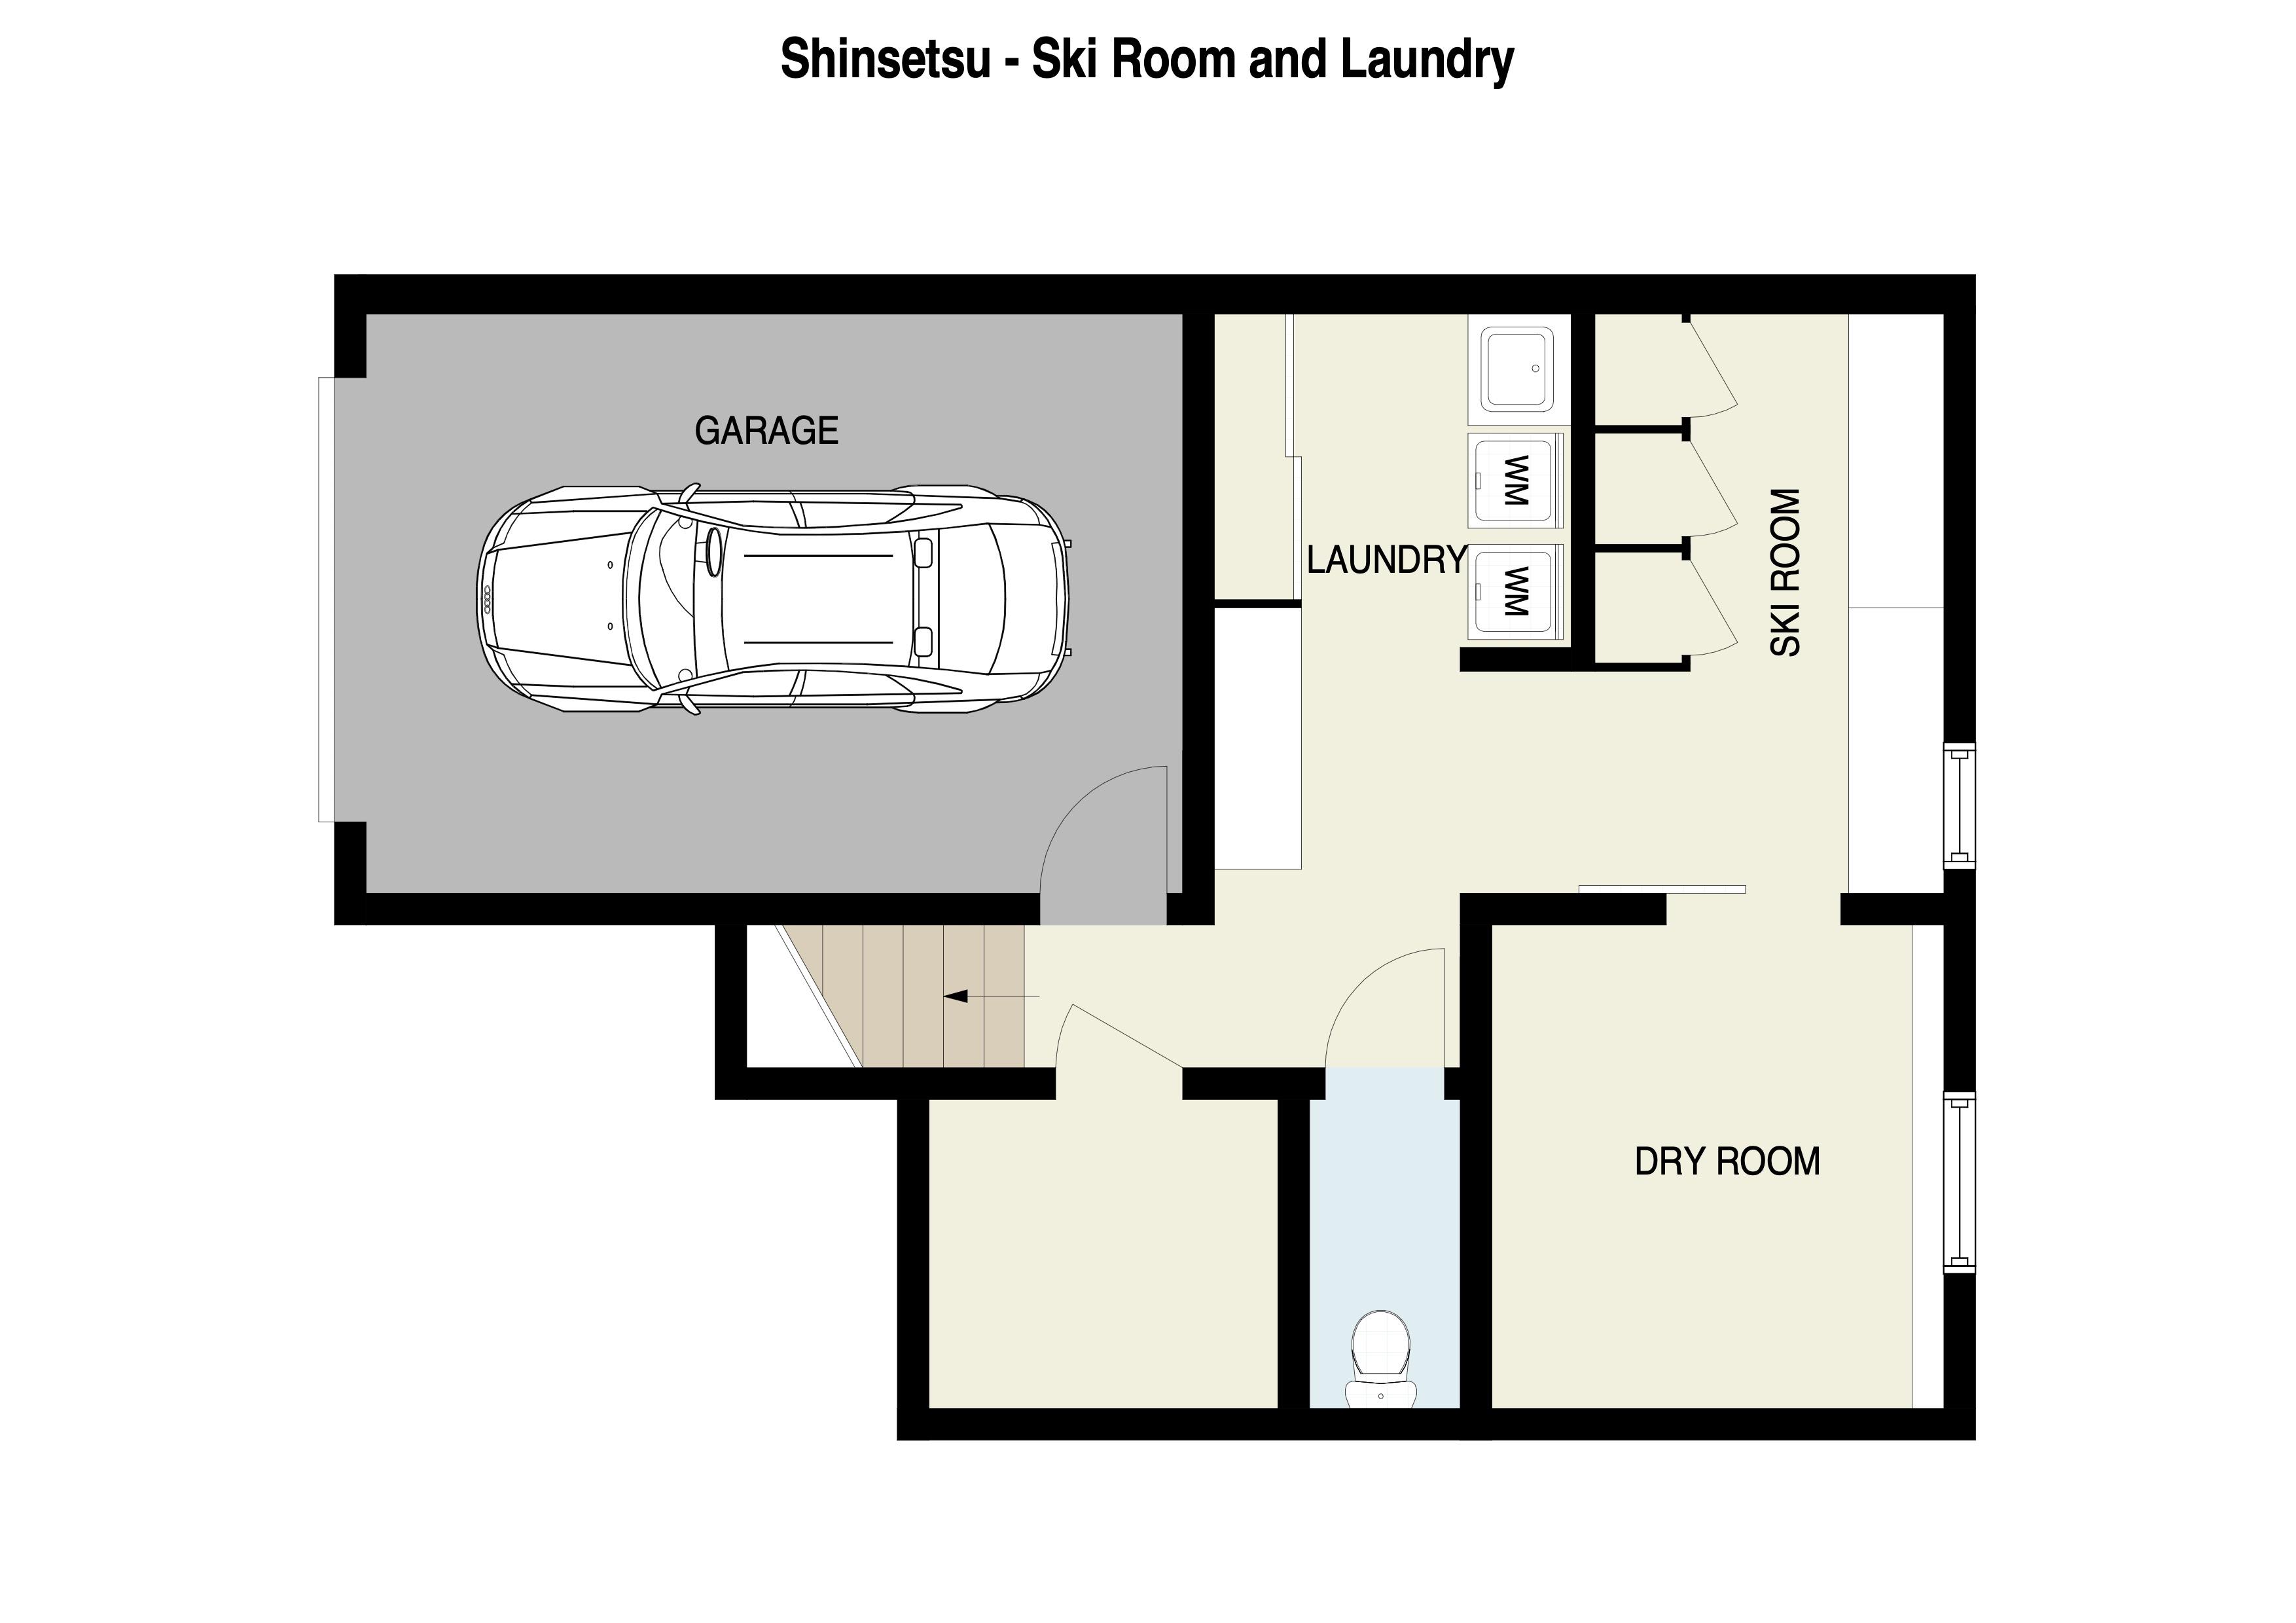 Shinsetsu Ski Room and Laundry floor plan